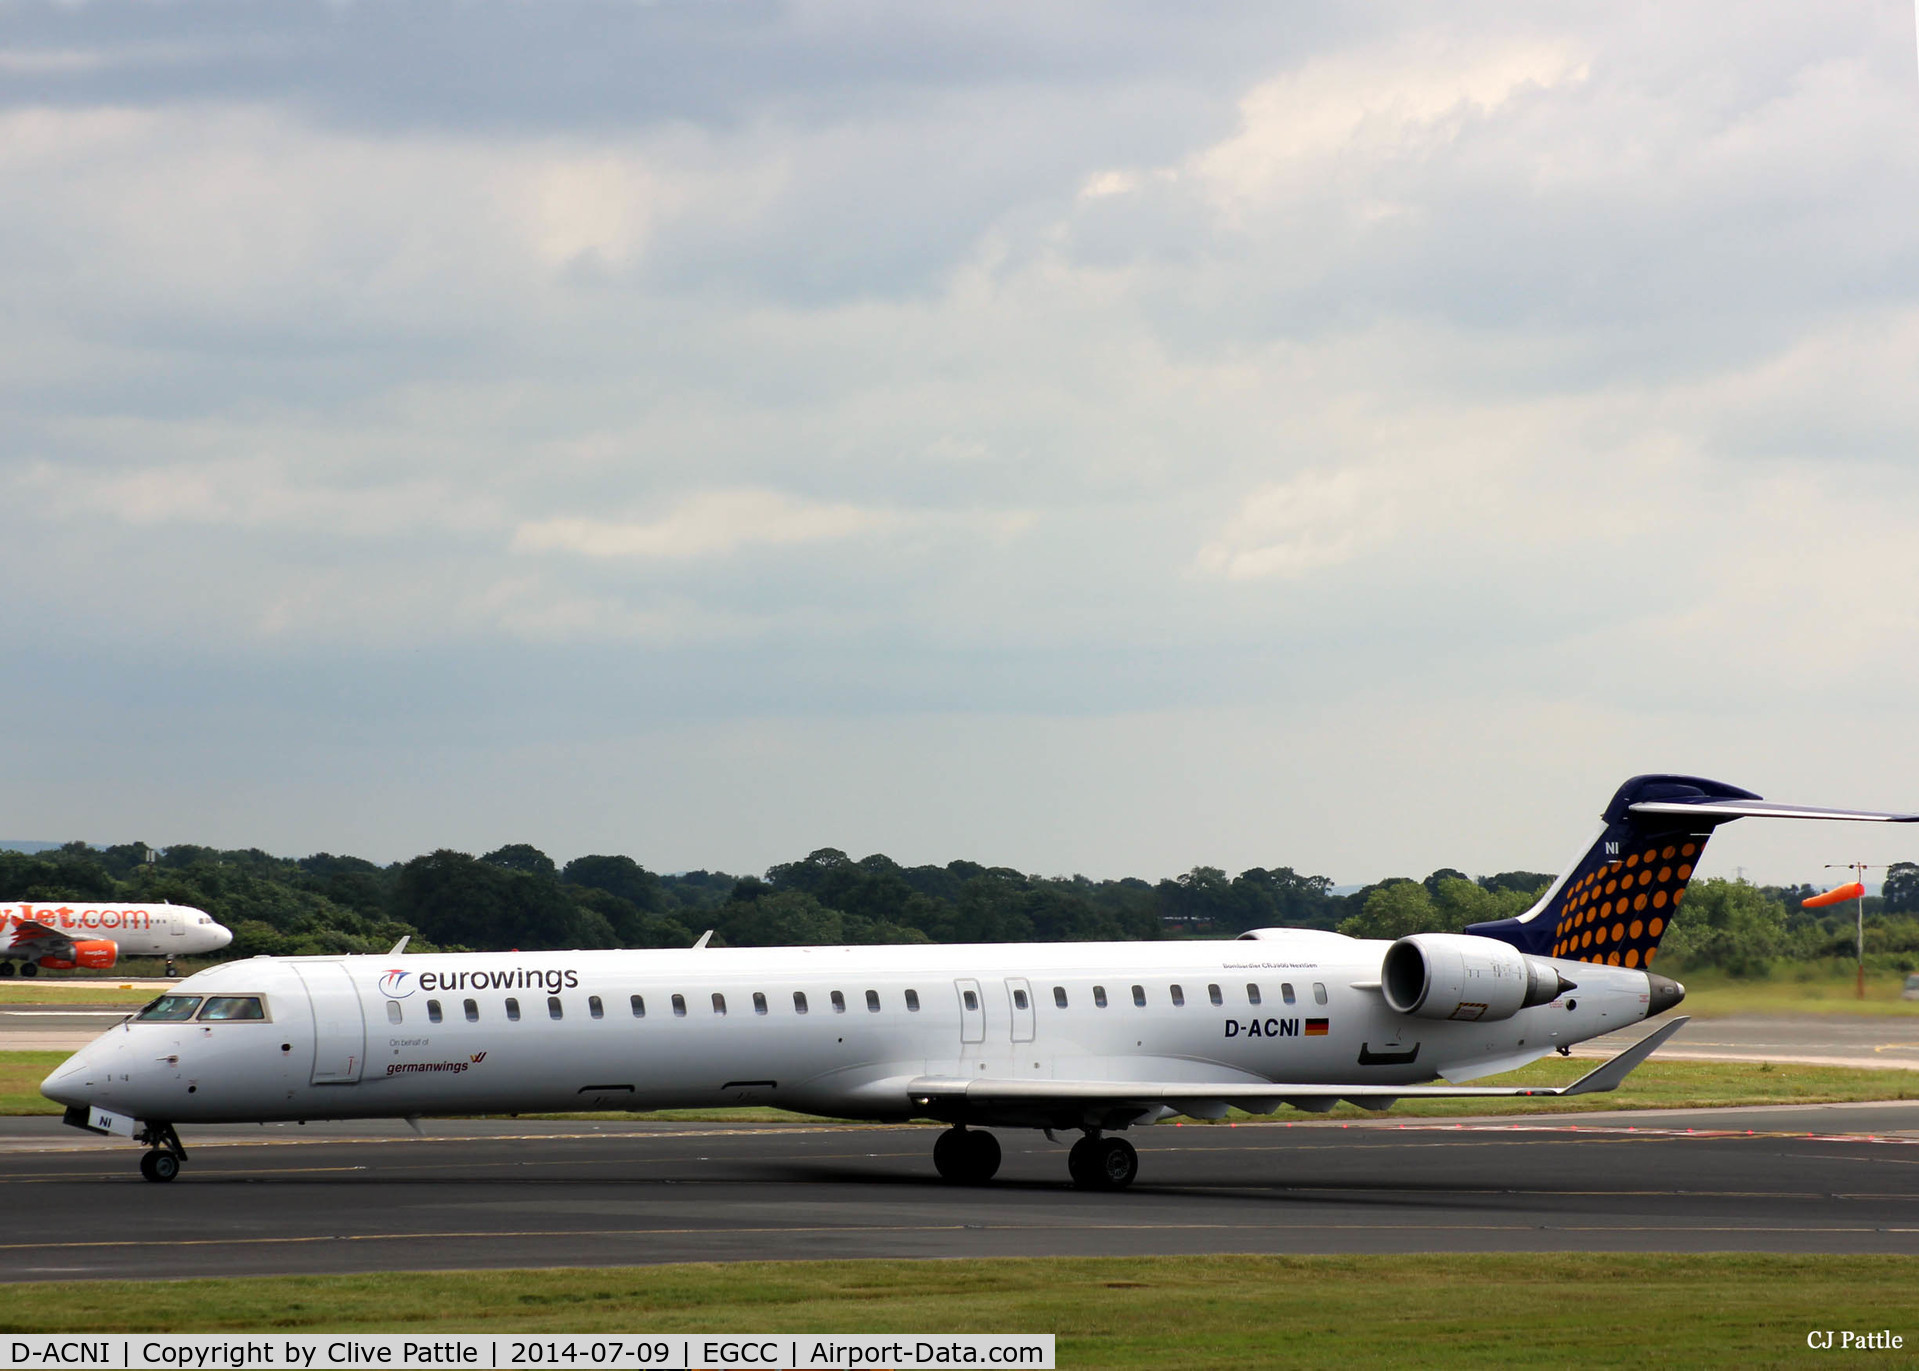 D-ACNI, 2009 Bombardier CRJ-900 NG (CL-600-2D24) C/N 15248, Taxy to gate